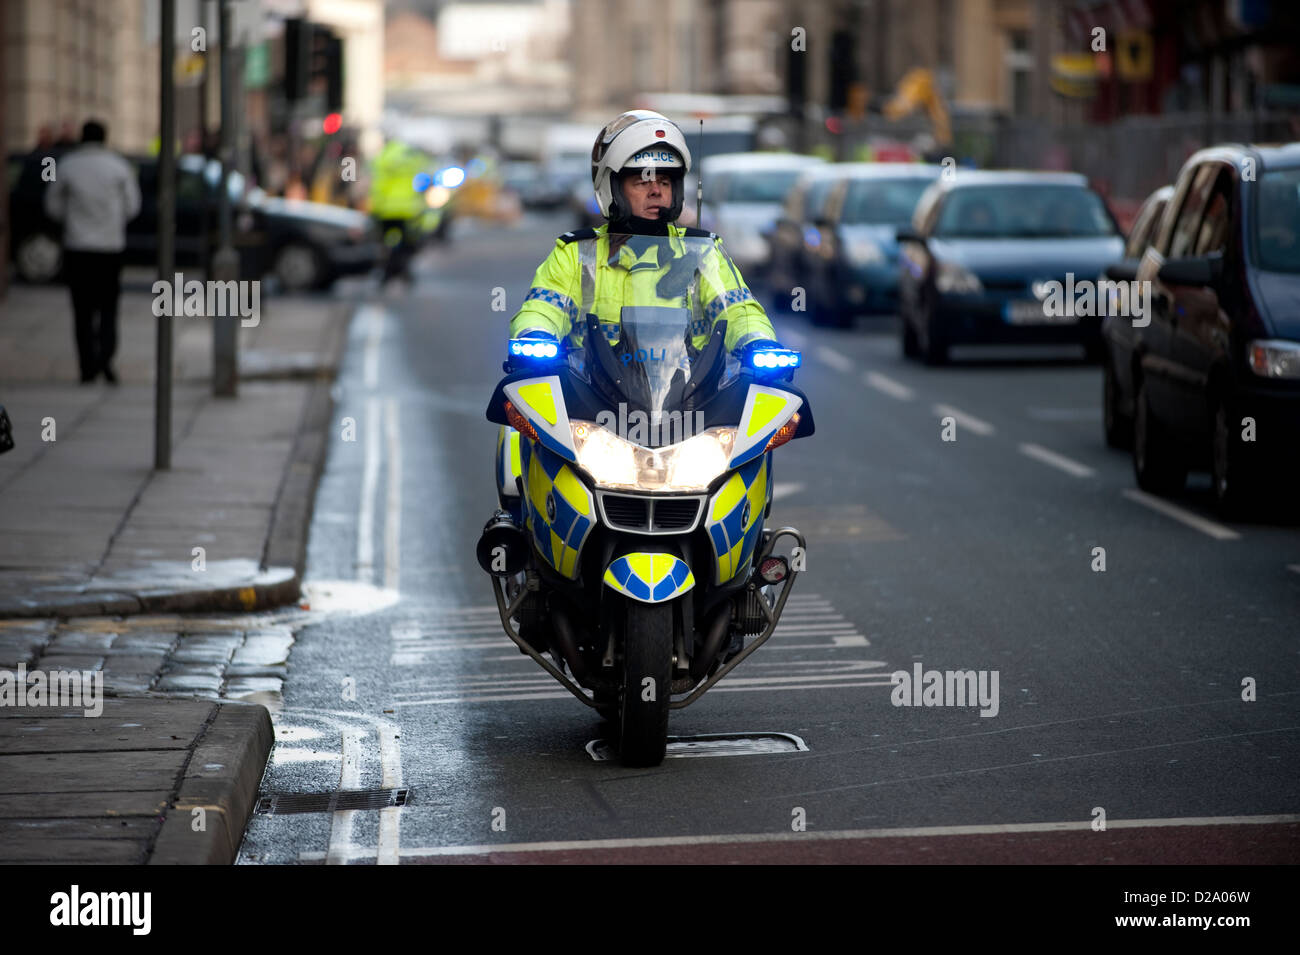 Police Motorcyclist responding on Blue Lights Stock Photo